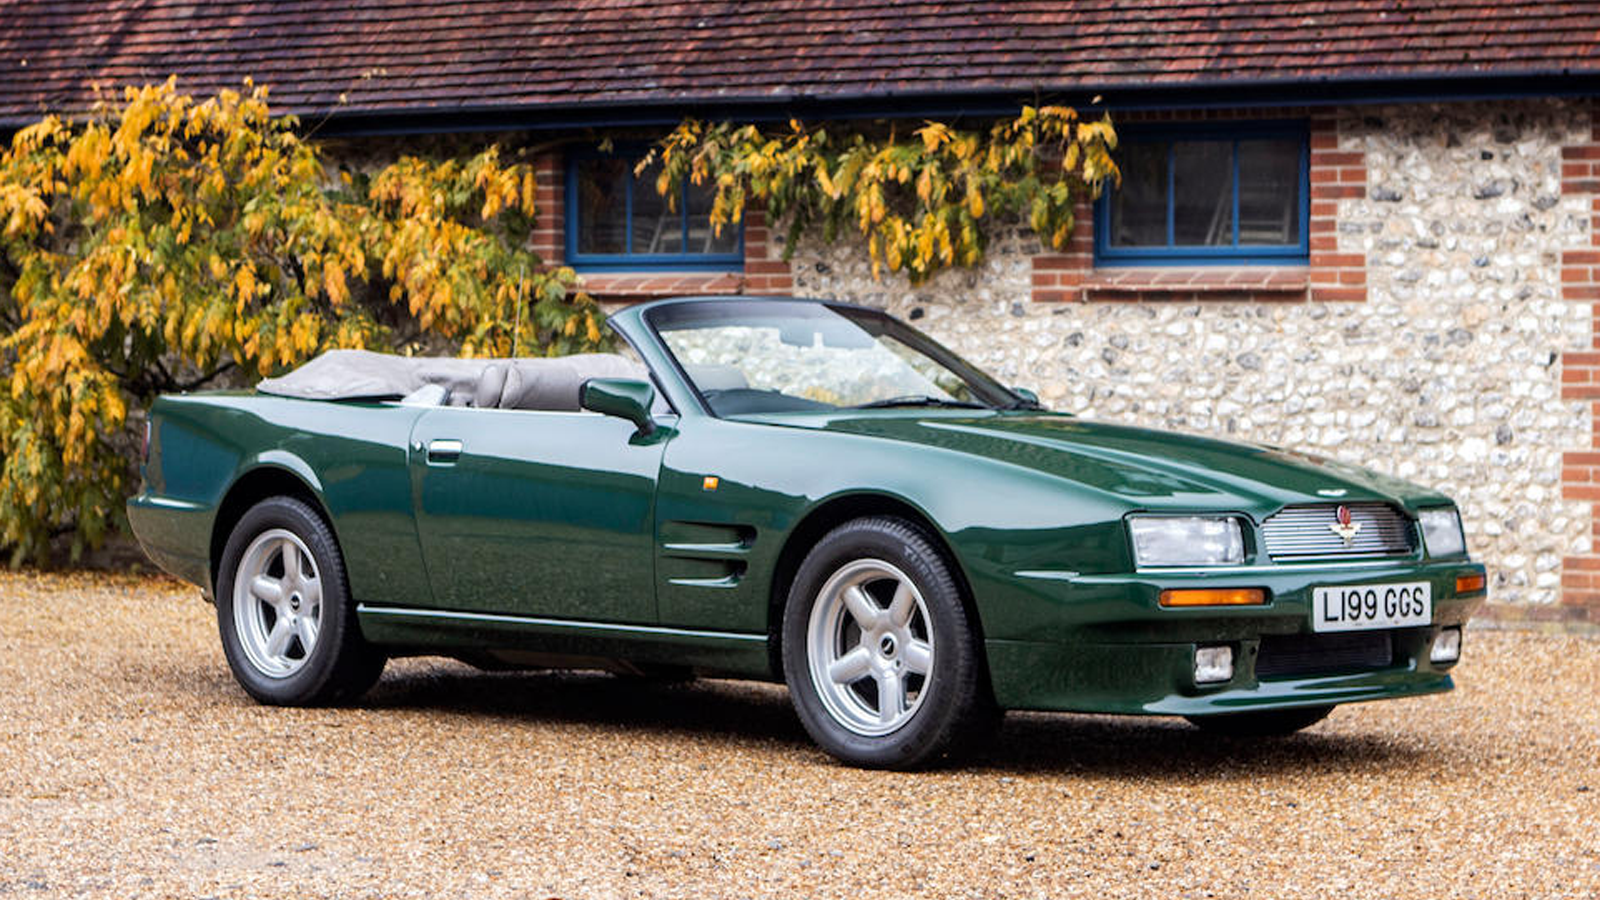 ‘Missing’ Aston Martin leads Bonhams’ Bond Street sale